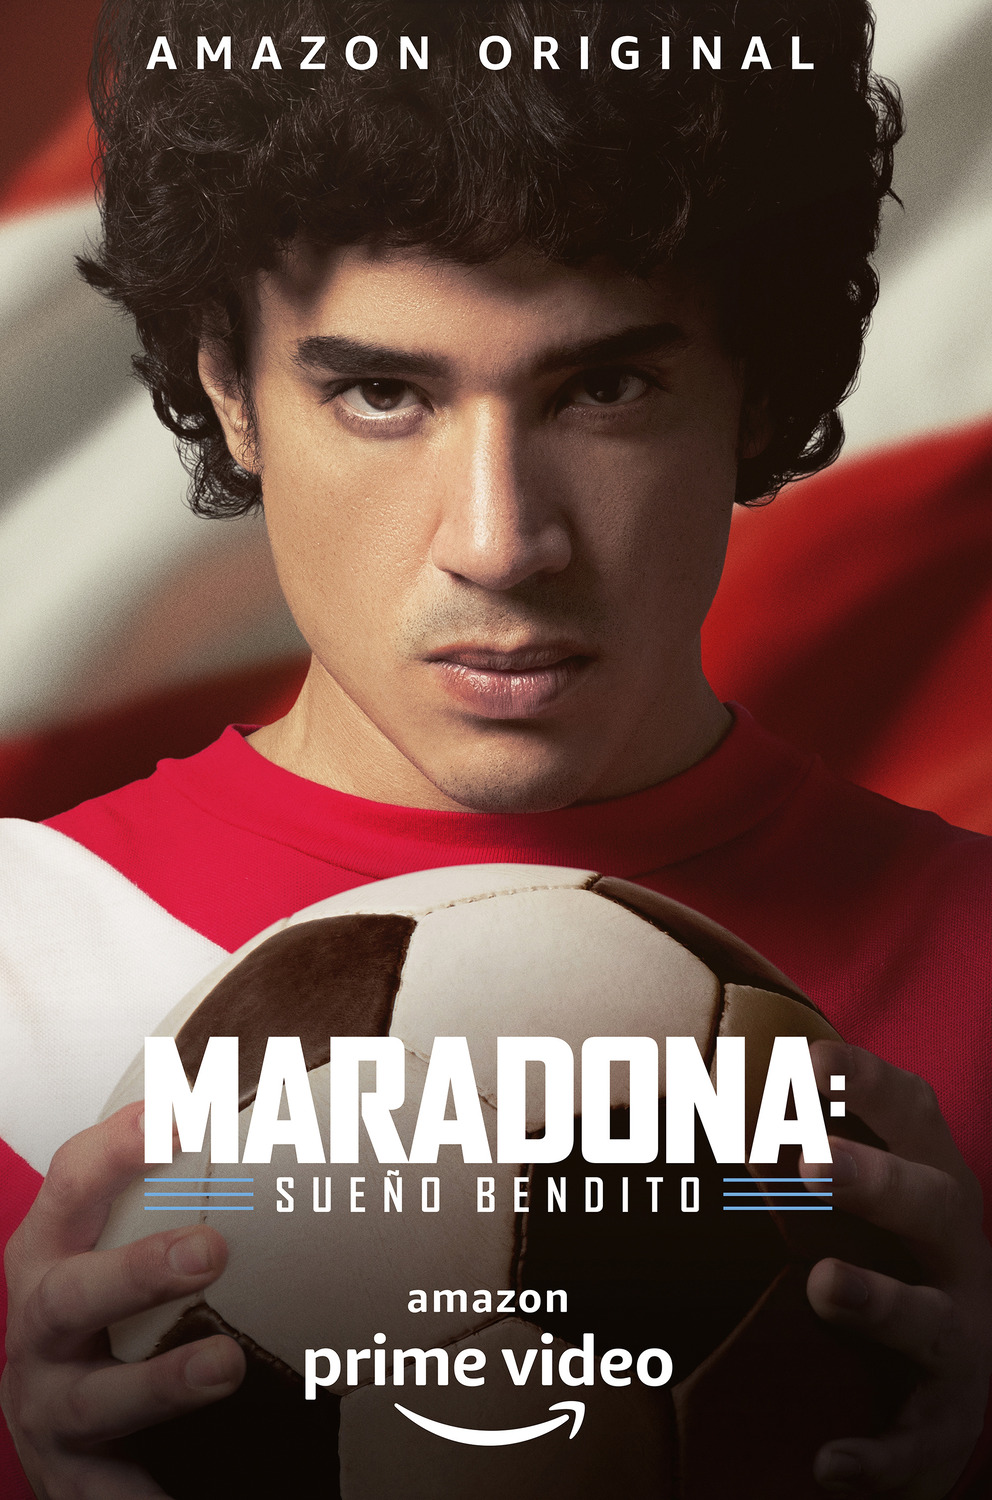 Extra Large TV Poster Image for Maradona, sueño bendito (#12 of 21)